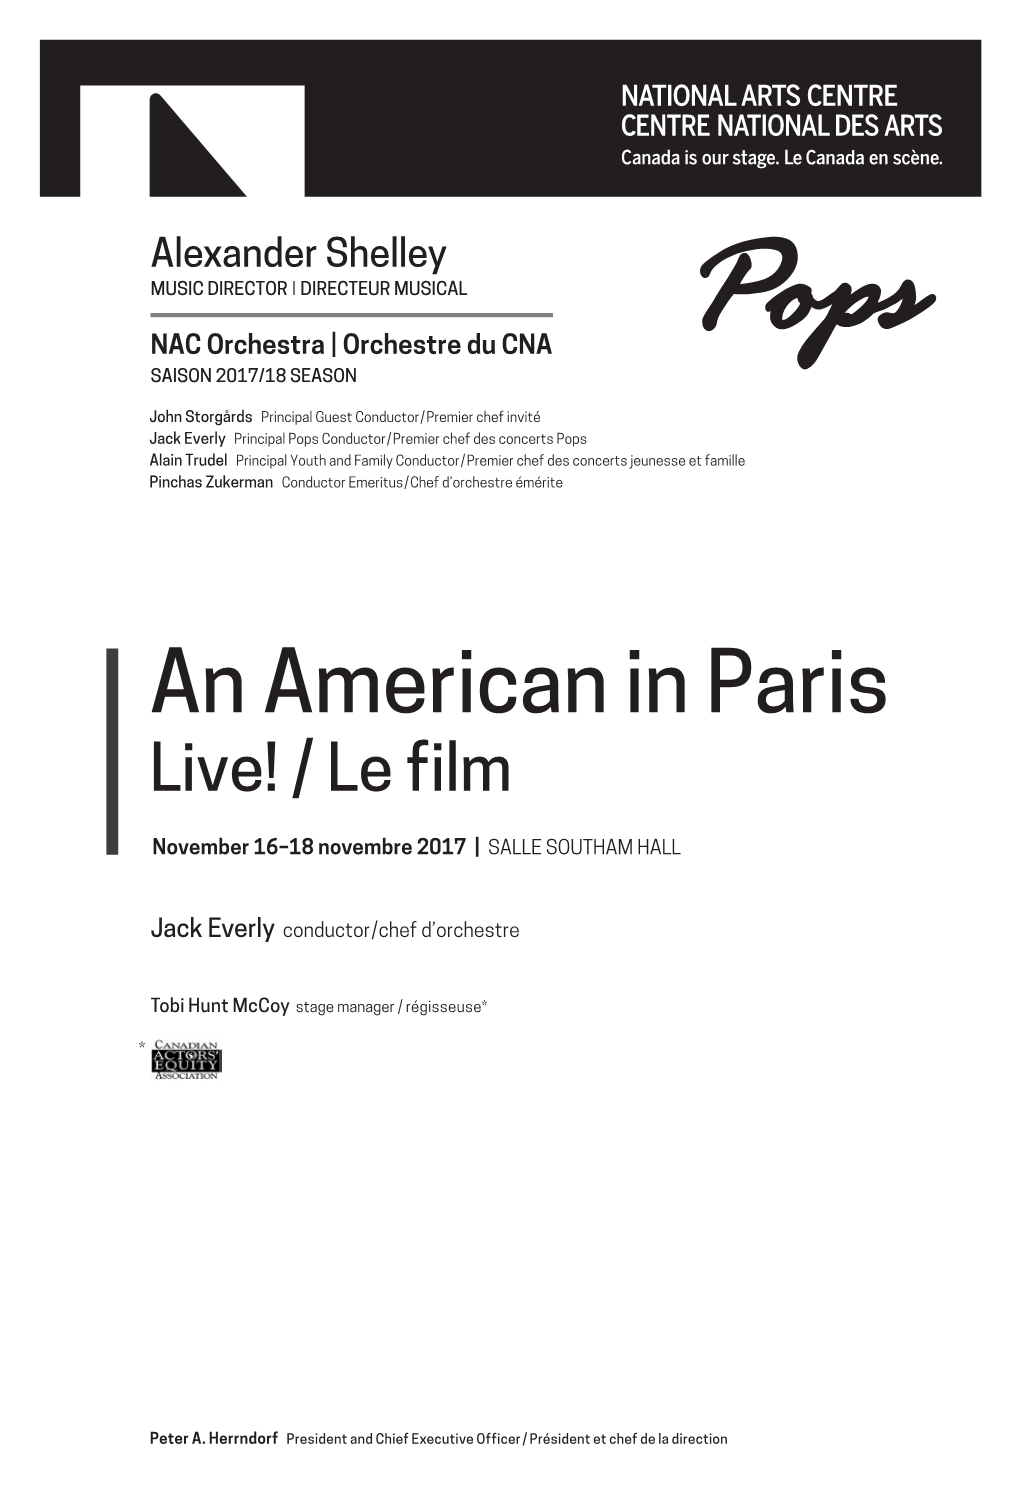 An American in Paris Live! / Le Film